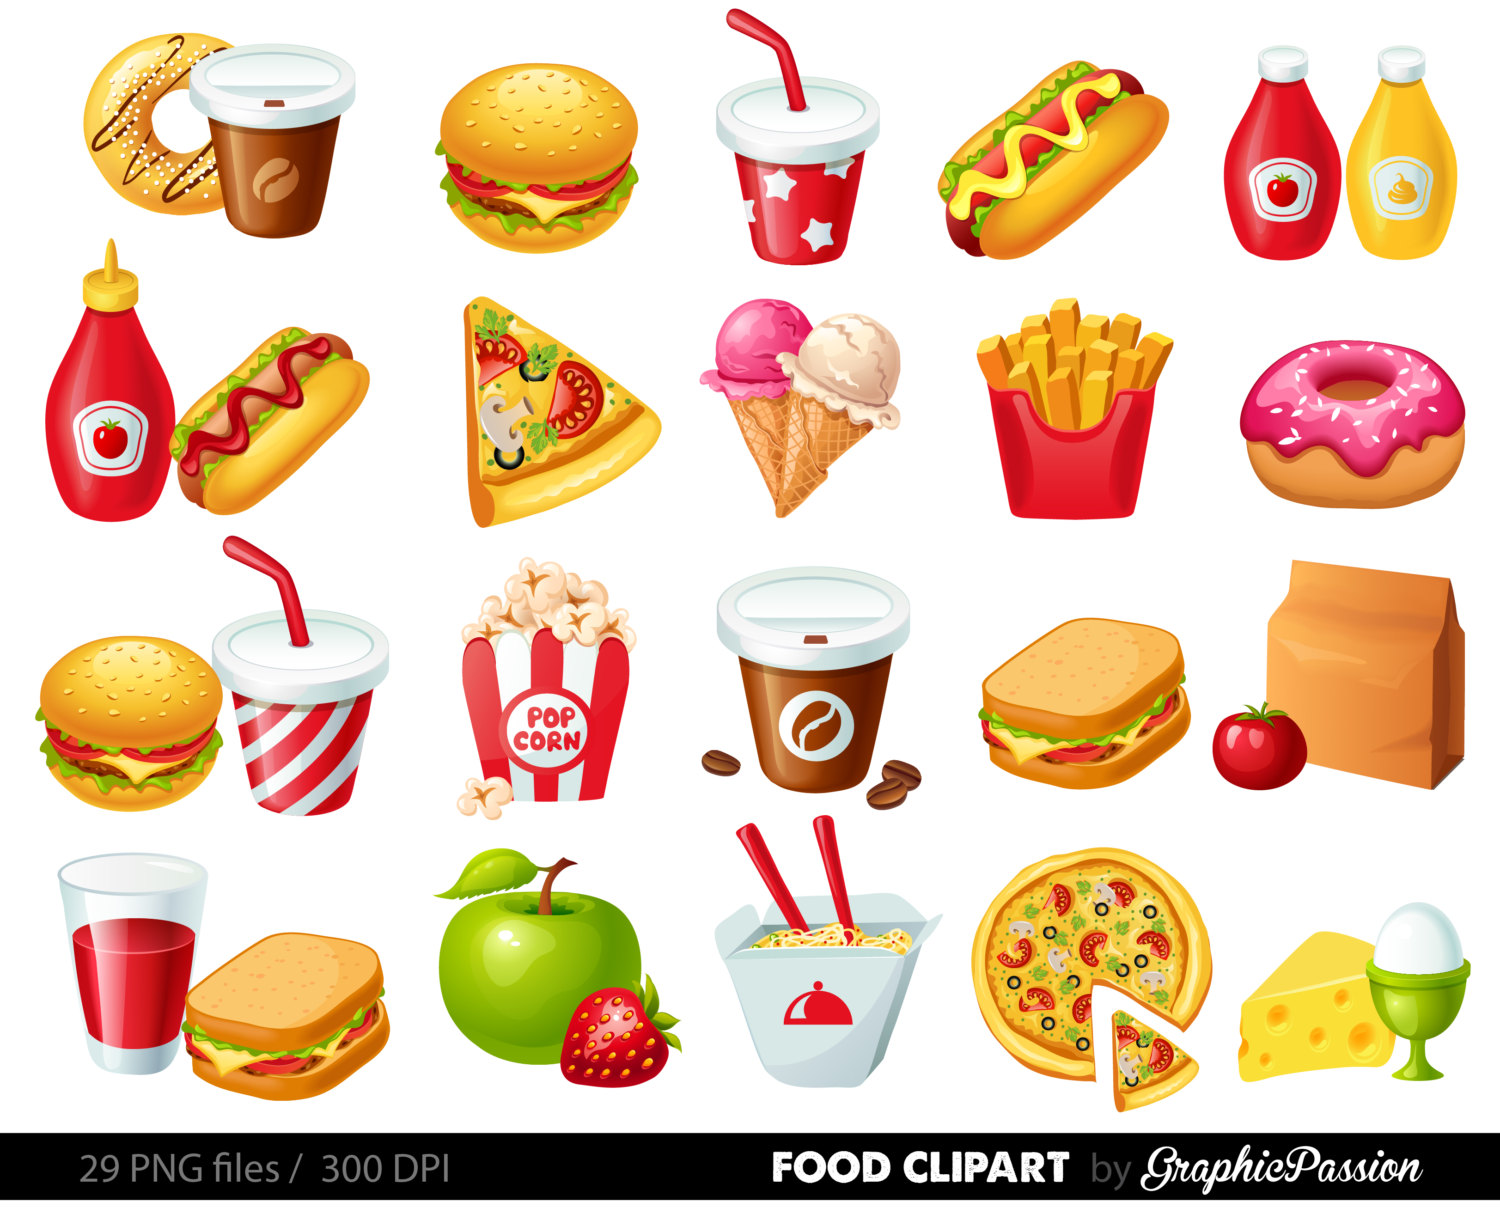 Junk Food Clipart Images